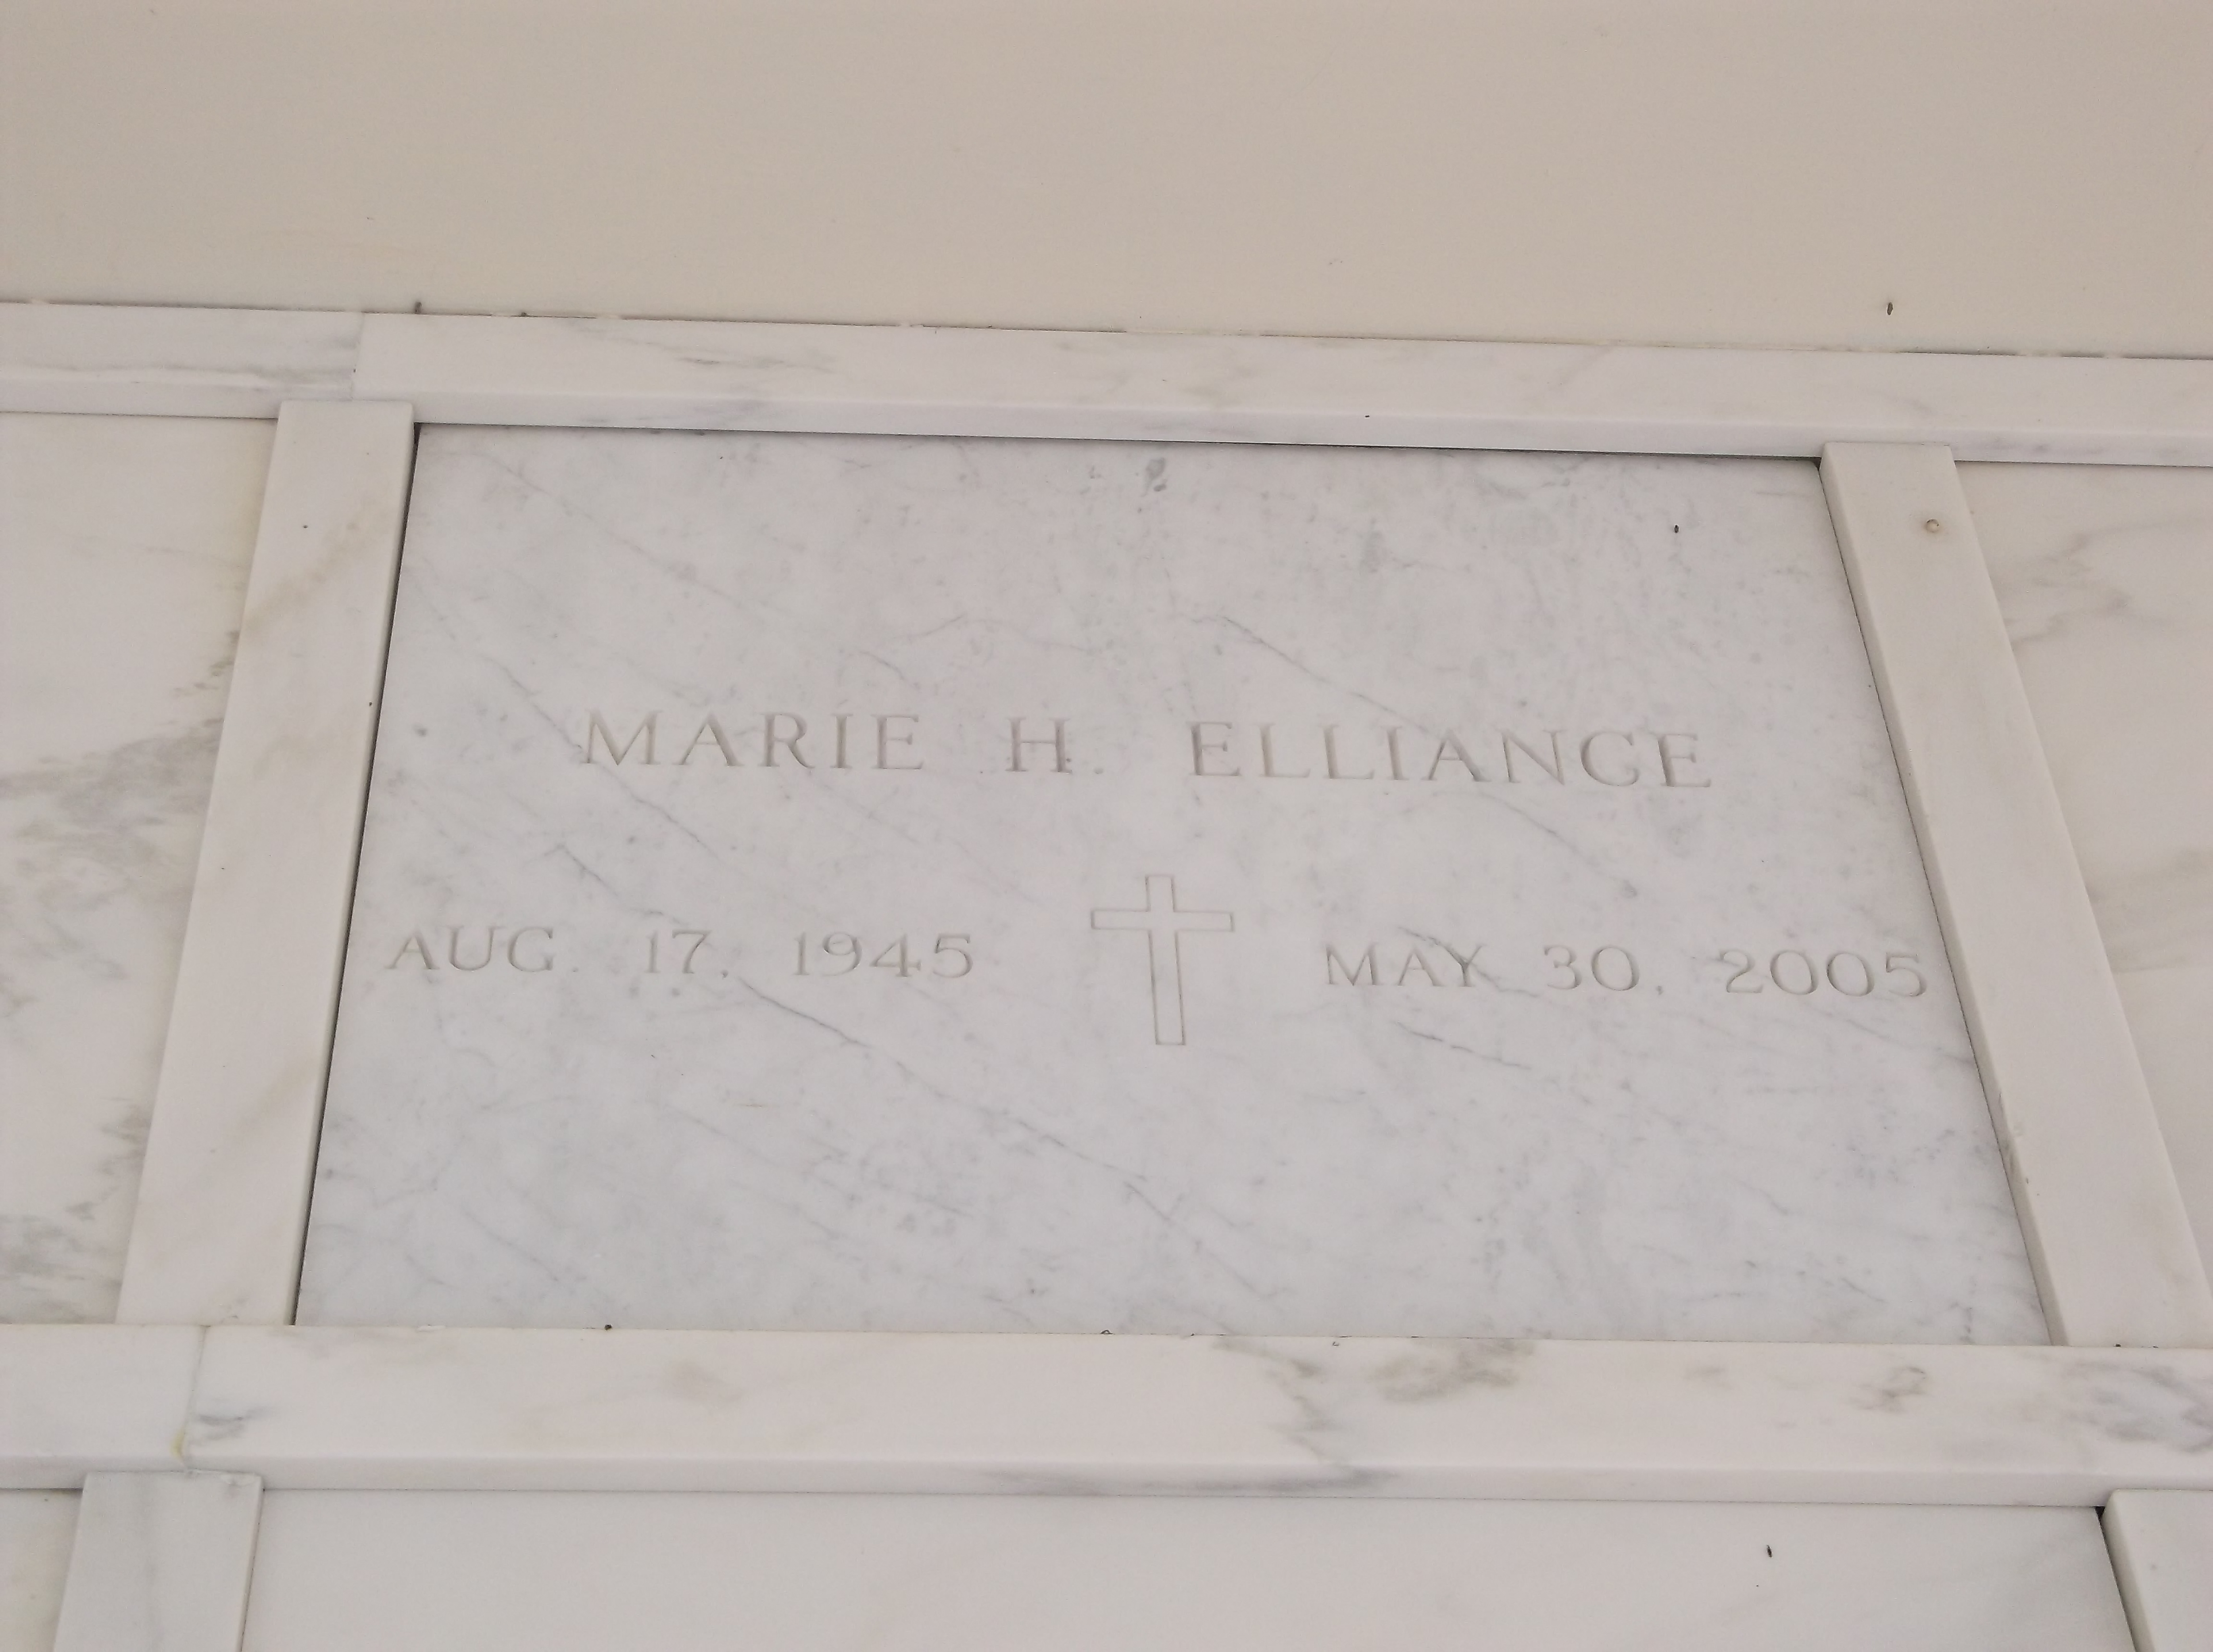 Marie H Elliance